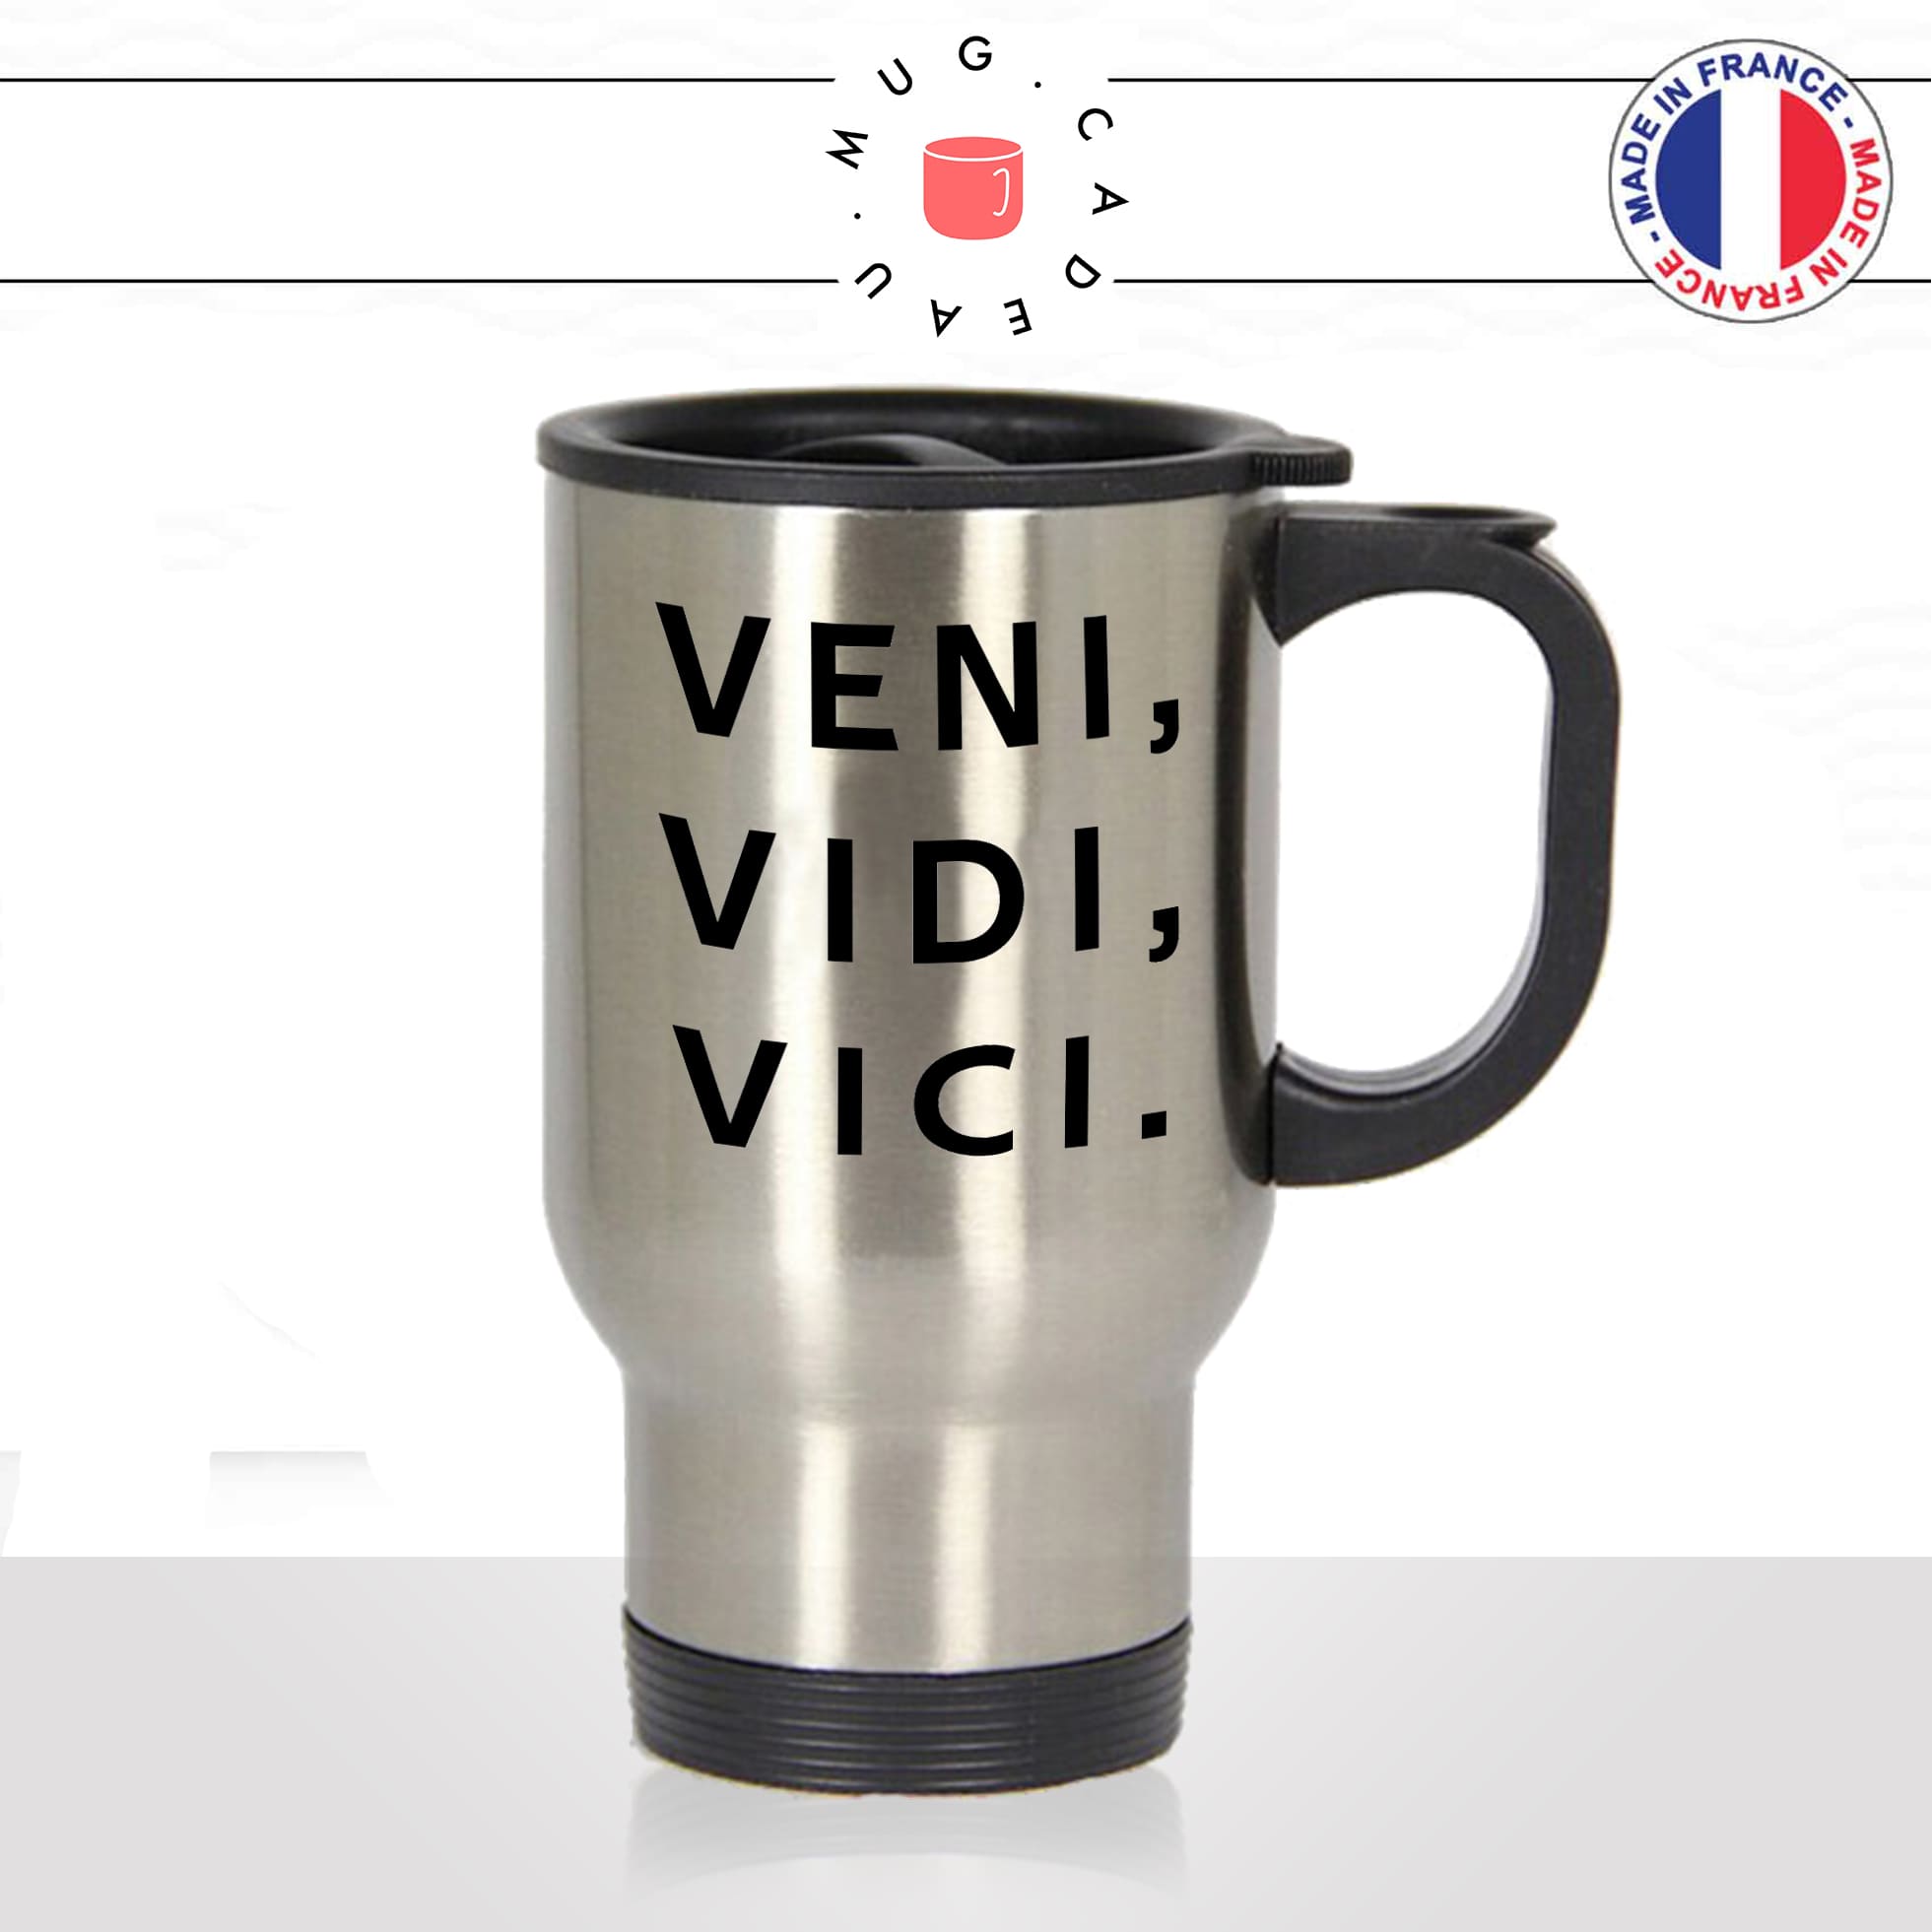 mug-tasse-thermos-isotherme-voyage-veni-vidi-vici-napoleon-latin-citataion-guerre-venu-vu-vaincu-humour-fun-idée-cadeau-originale-cool2